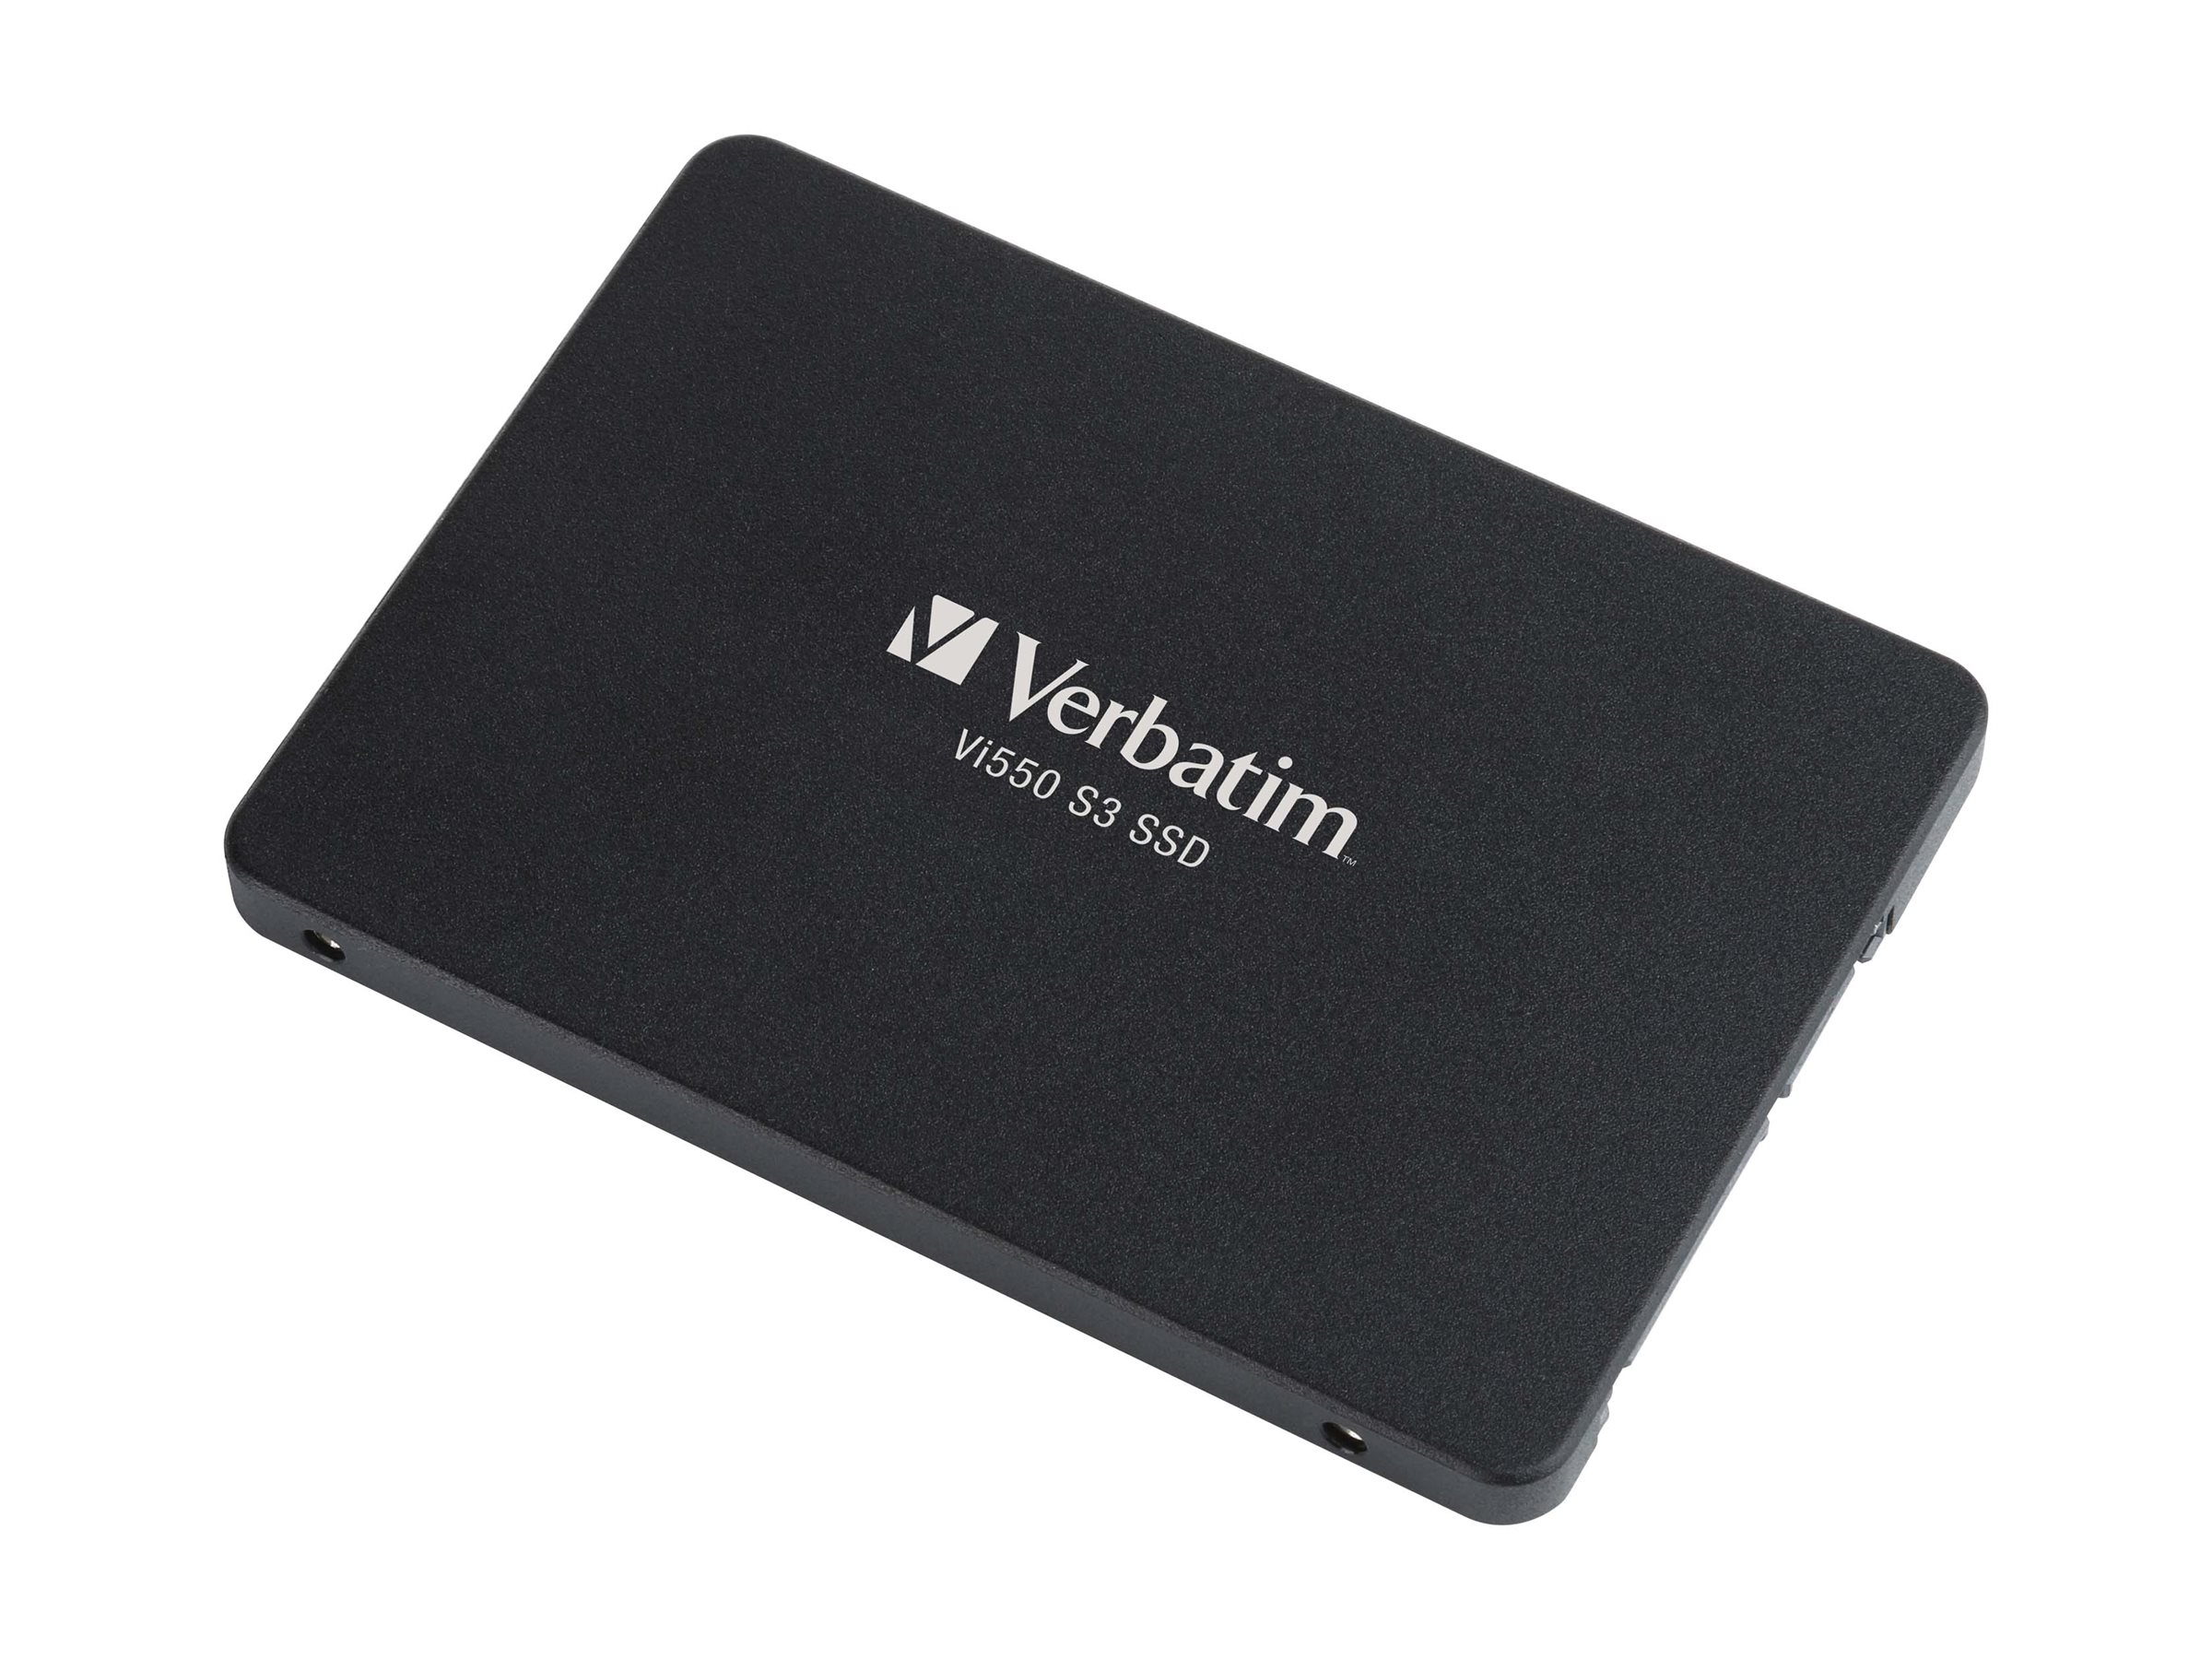 Verbatim Vi550 - SSD - 256 Go - interne - 2.5" - SATA 6Gb/s - 49351 - Disques durs pour ordinateur portable